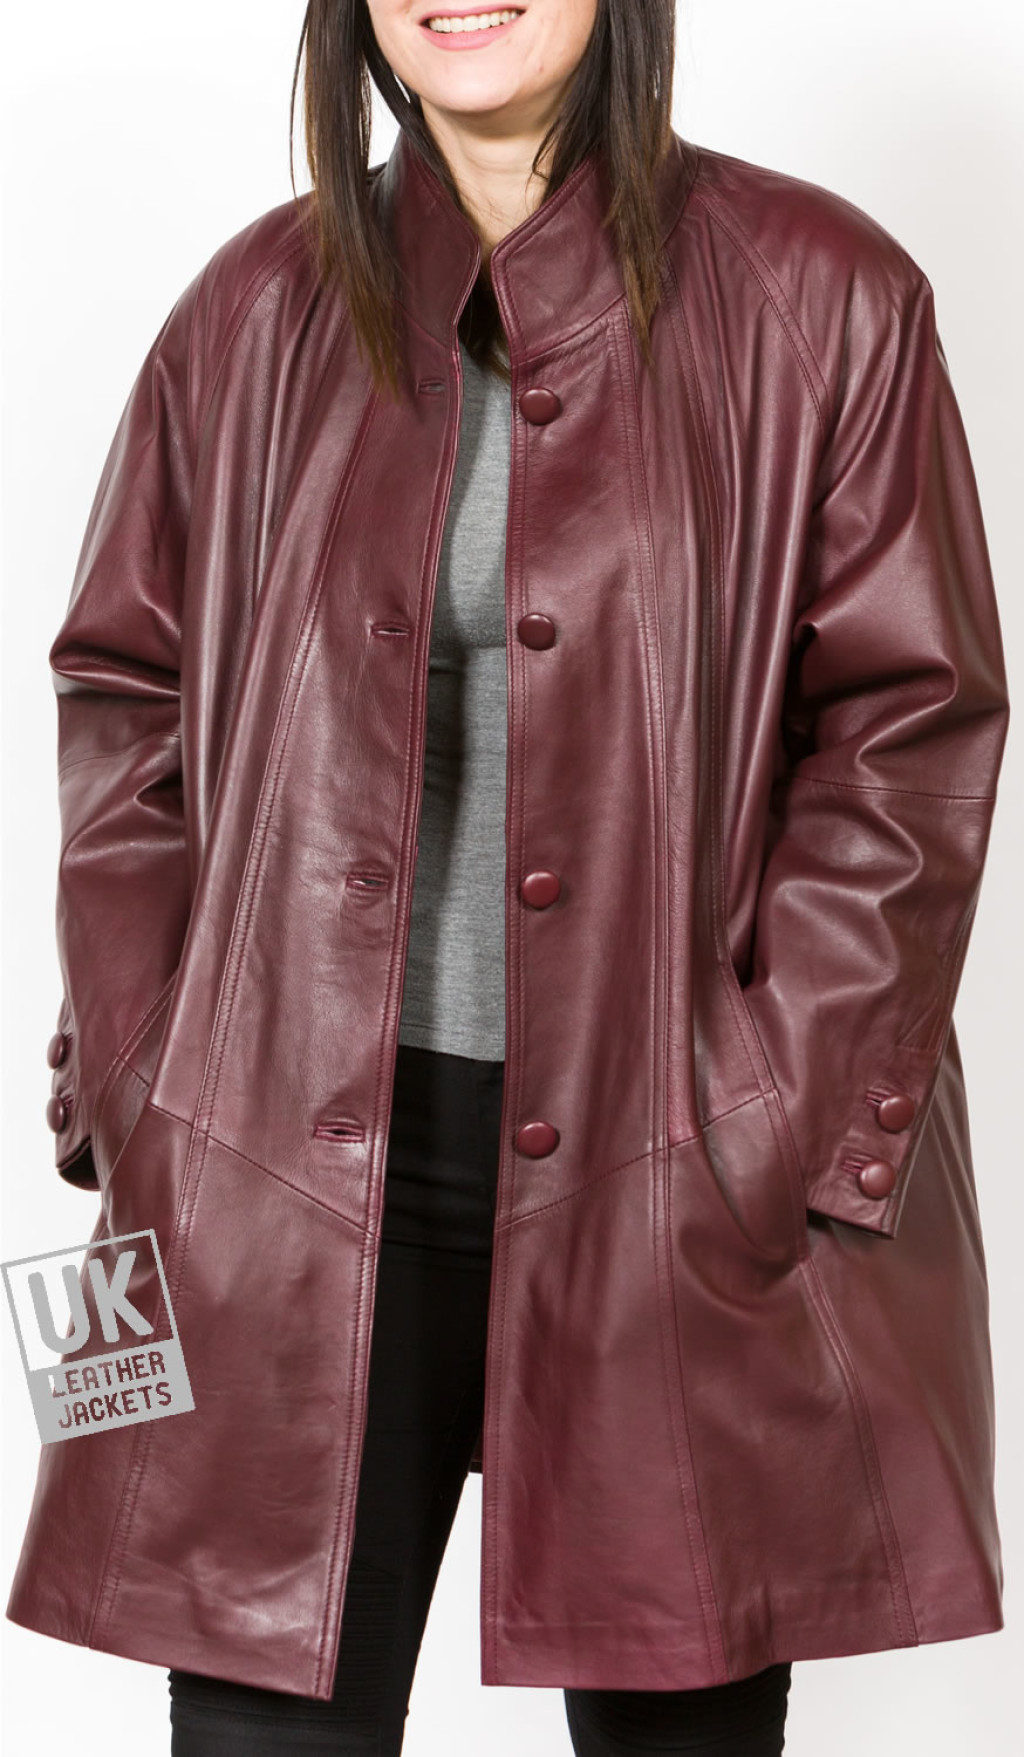 Nixiang Women's Leather Jackets,Cool Faux Jacket Plus India | Ubuy